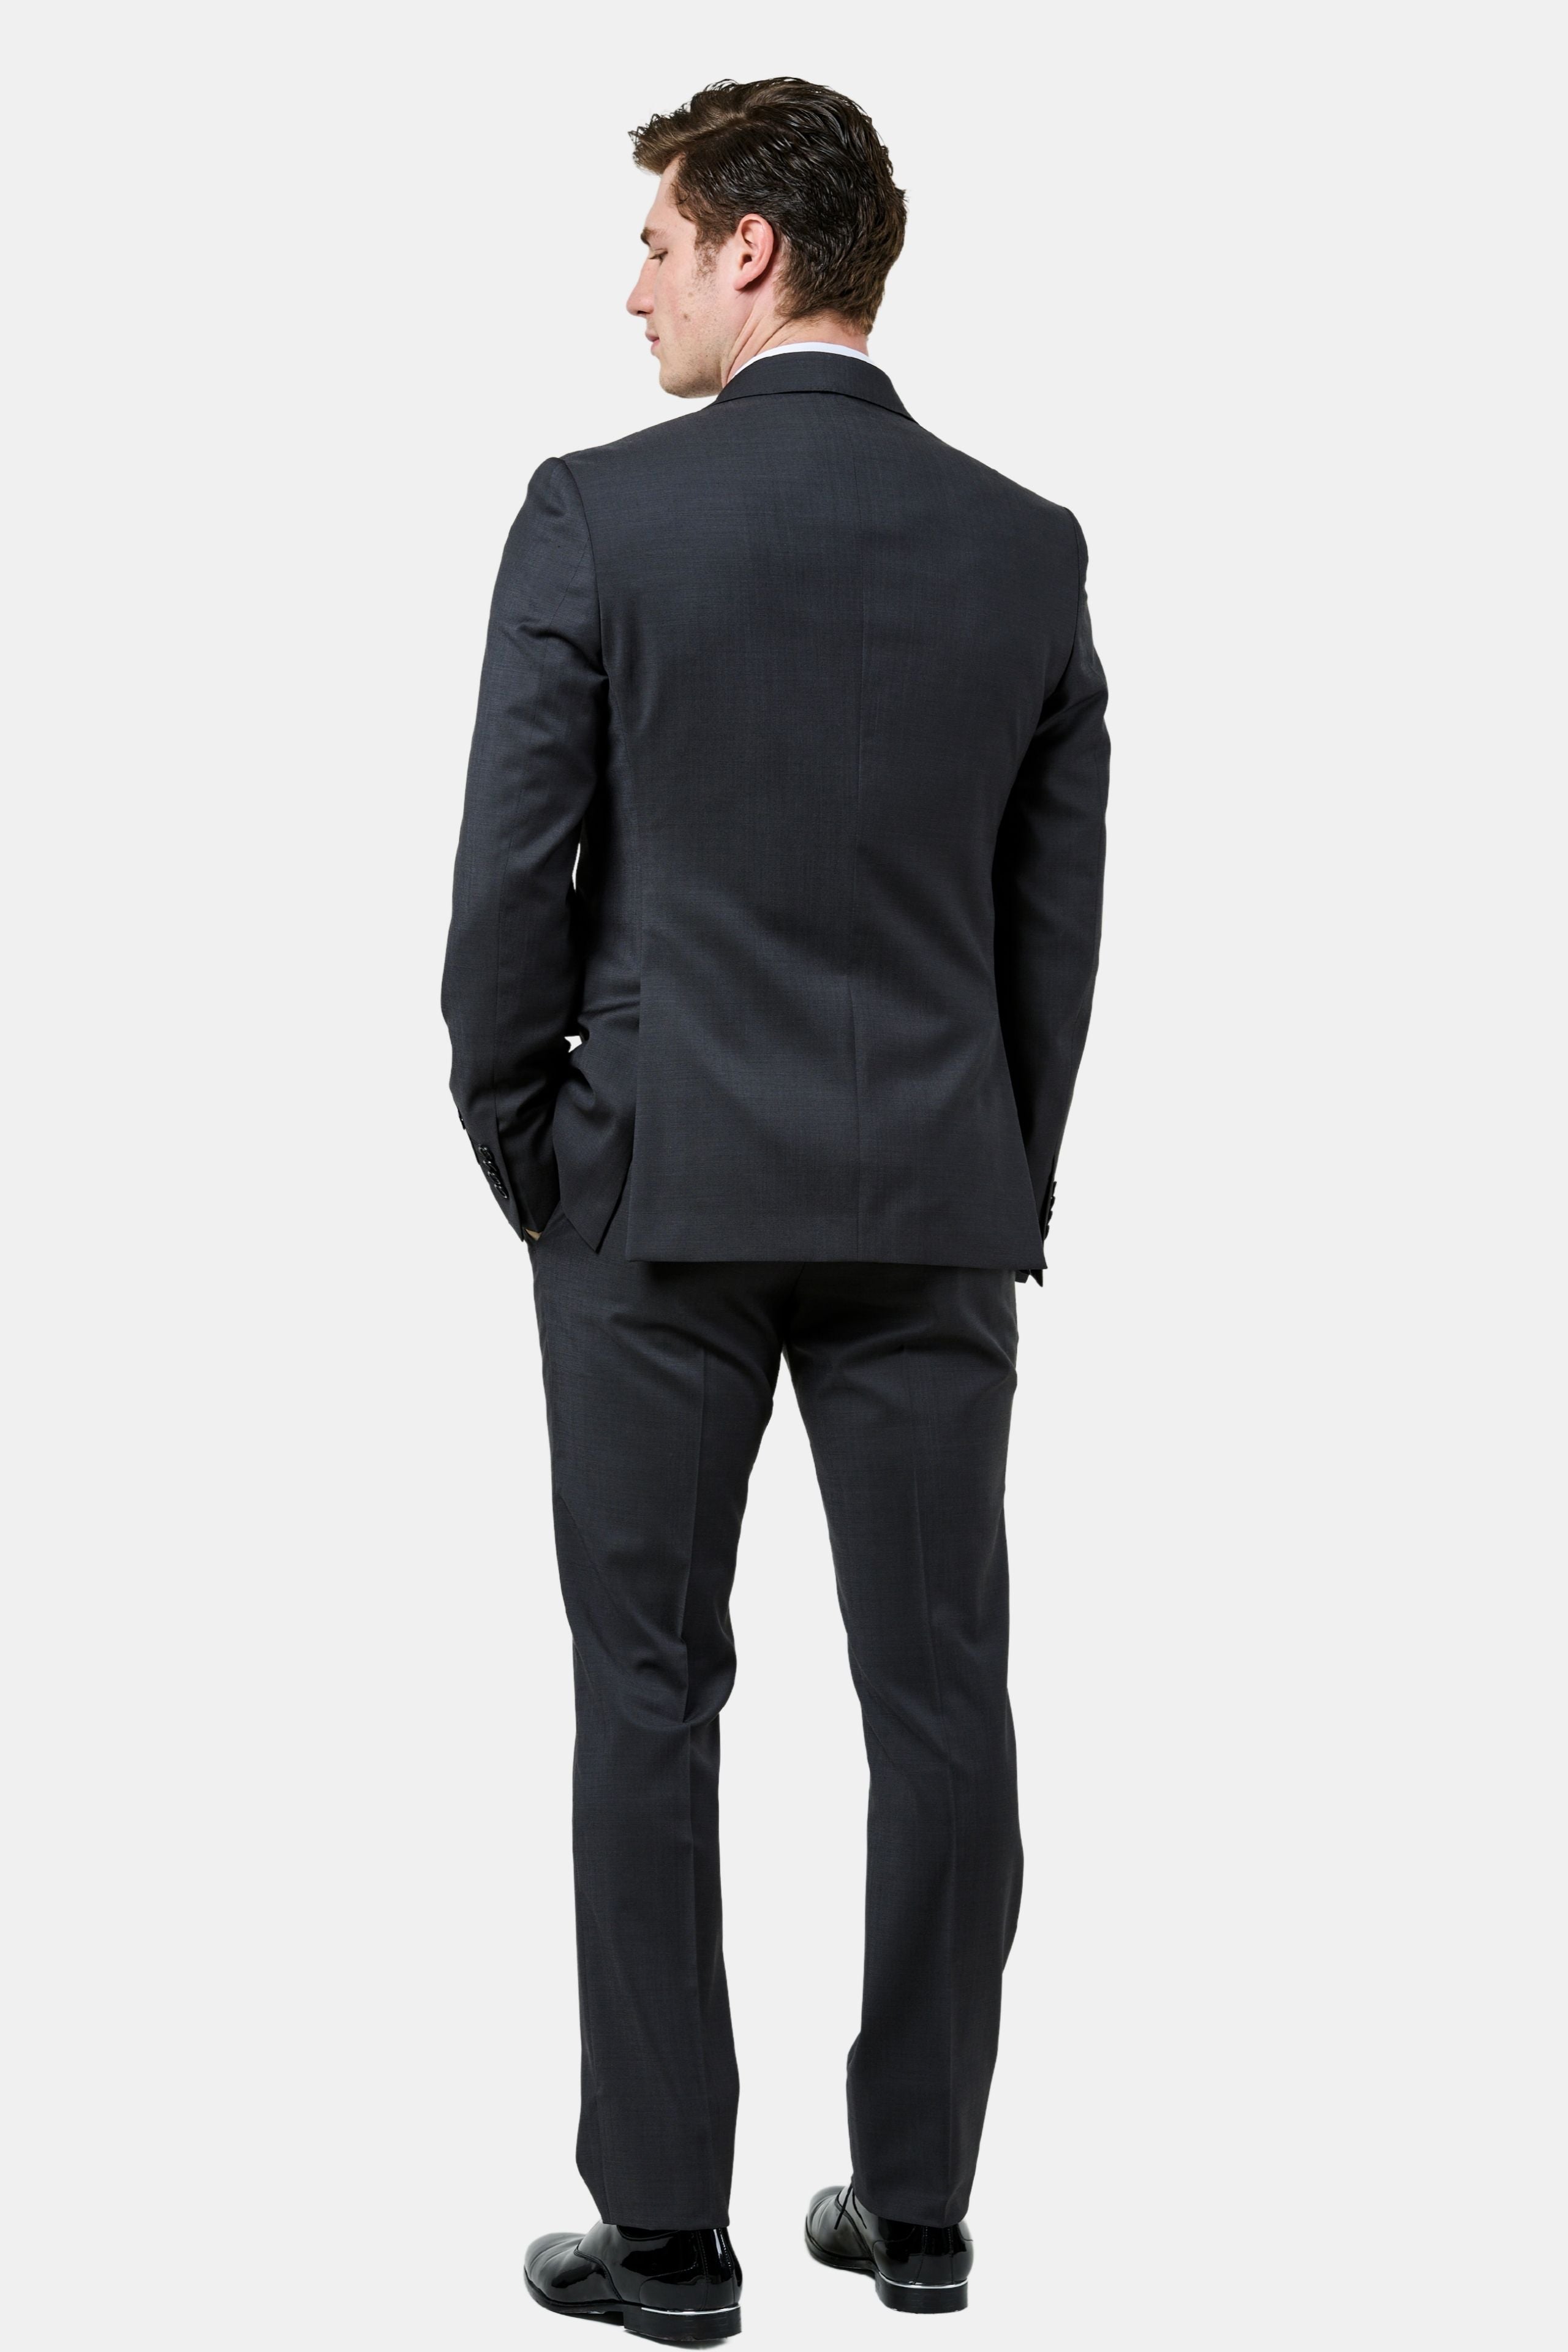 Regular fit grey wool suit - Charcoal grey